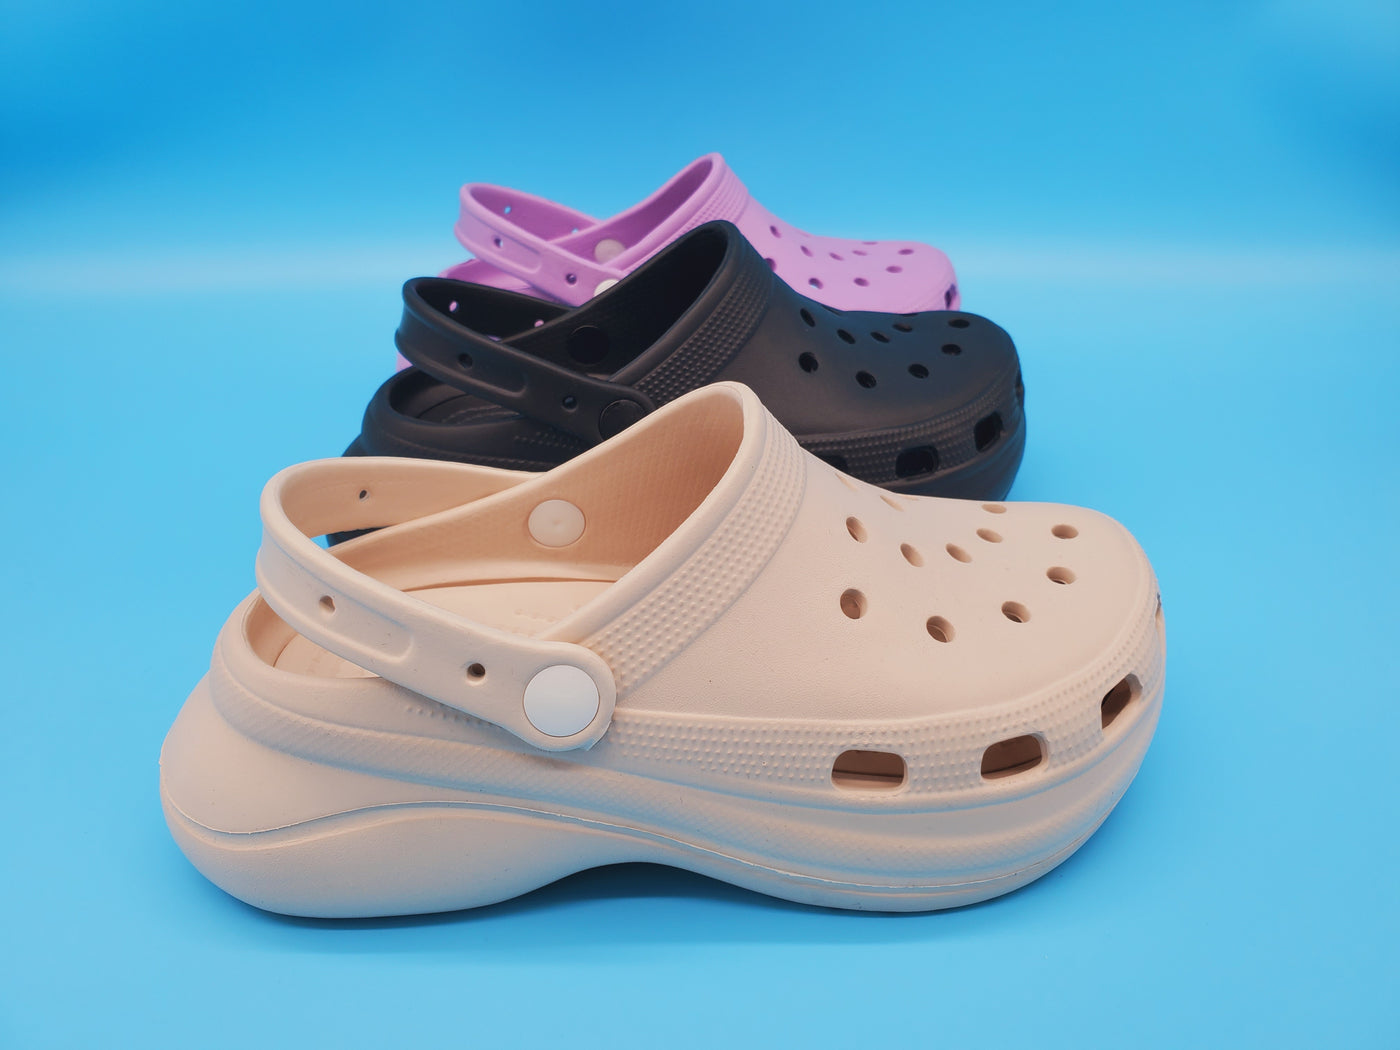 Crocs Like Deeply Cushion Sandals